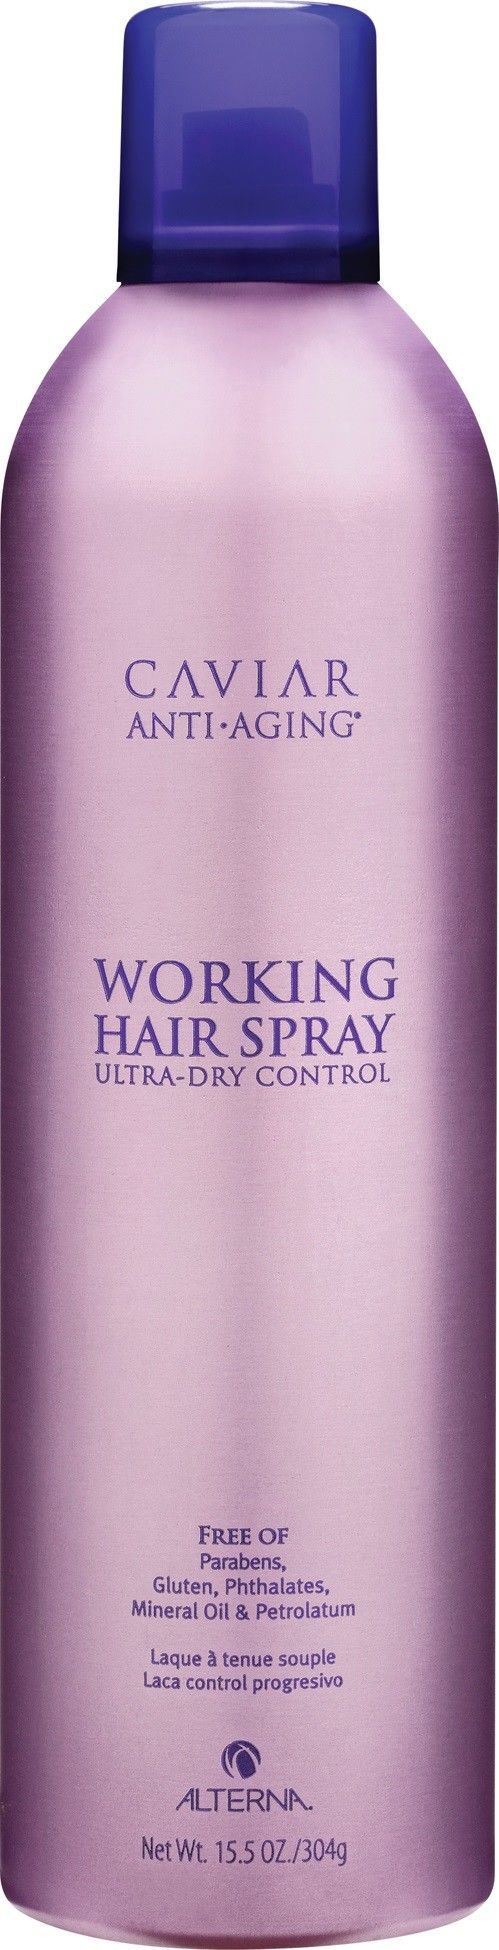 Alterna® Caviar Working Hairspray 250ml